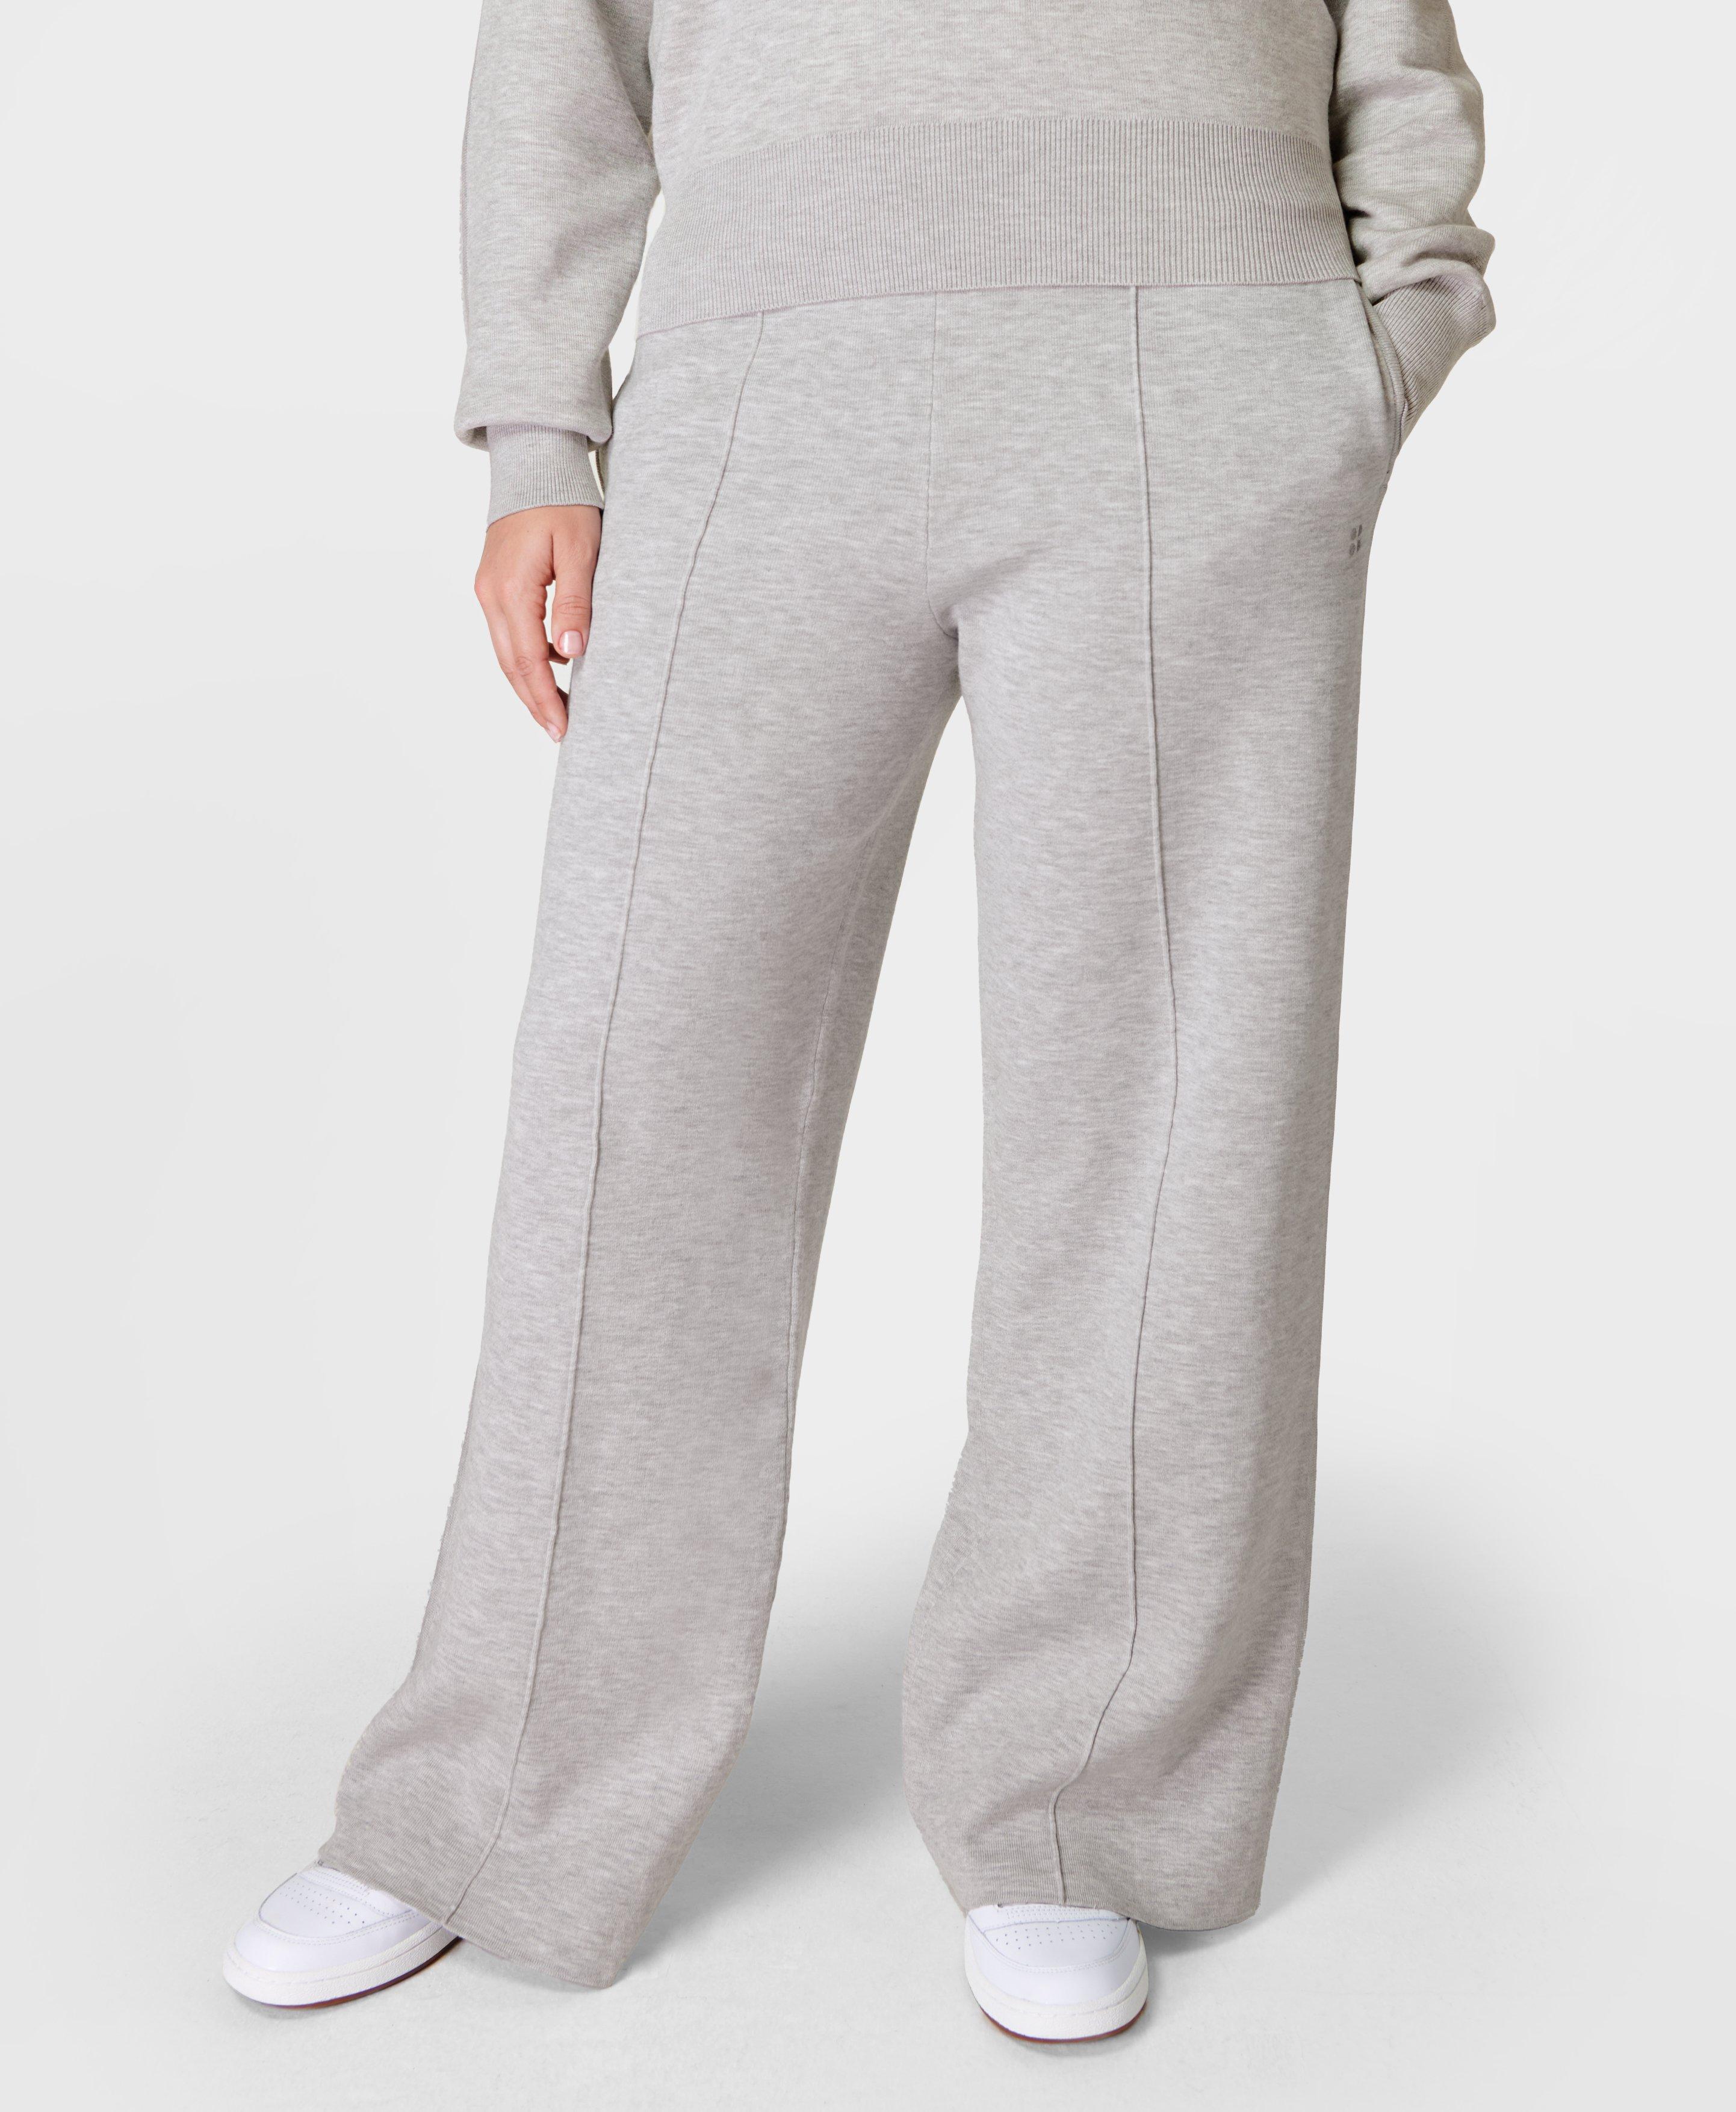 Brilliant Basics Women's Basic Fleece Track Pants - Grey Marl